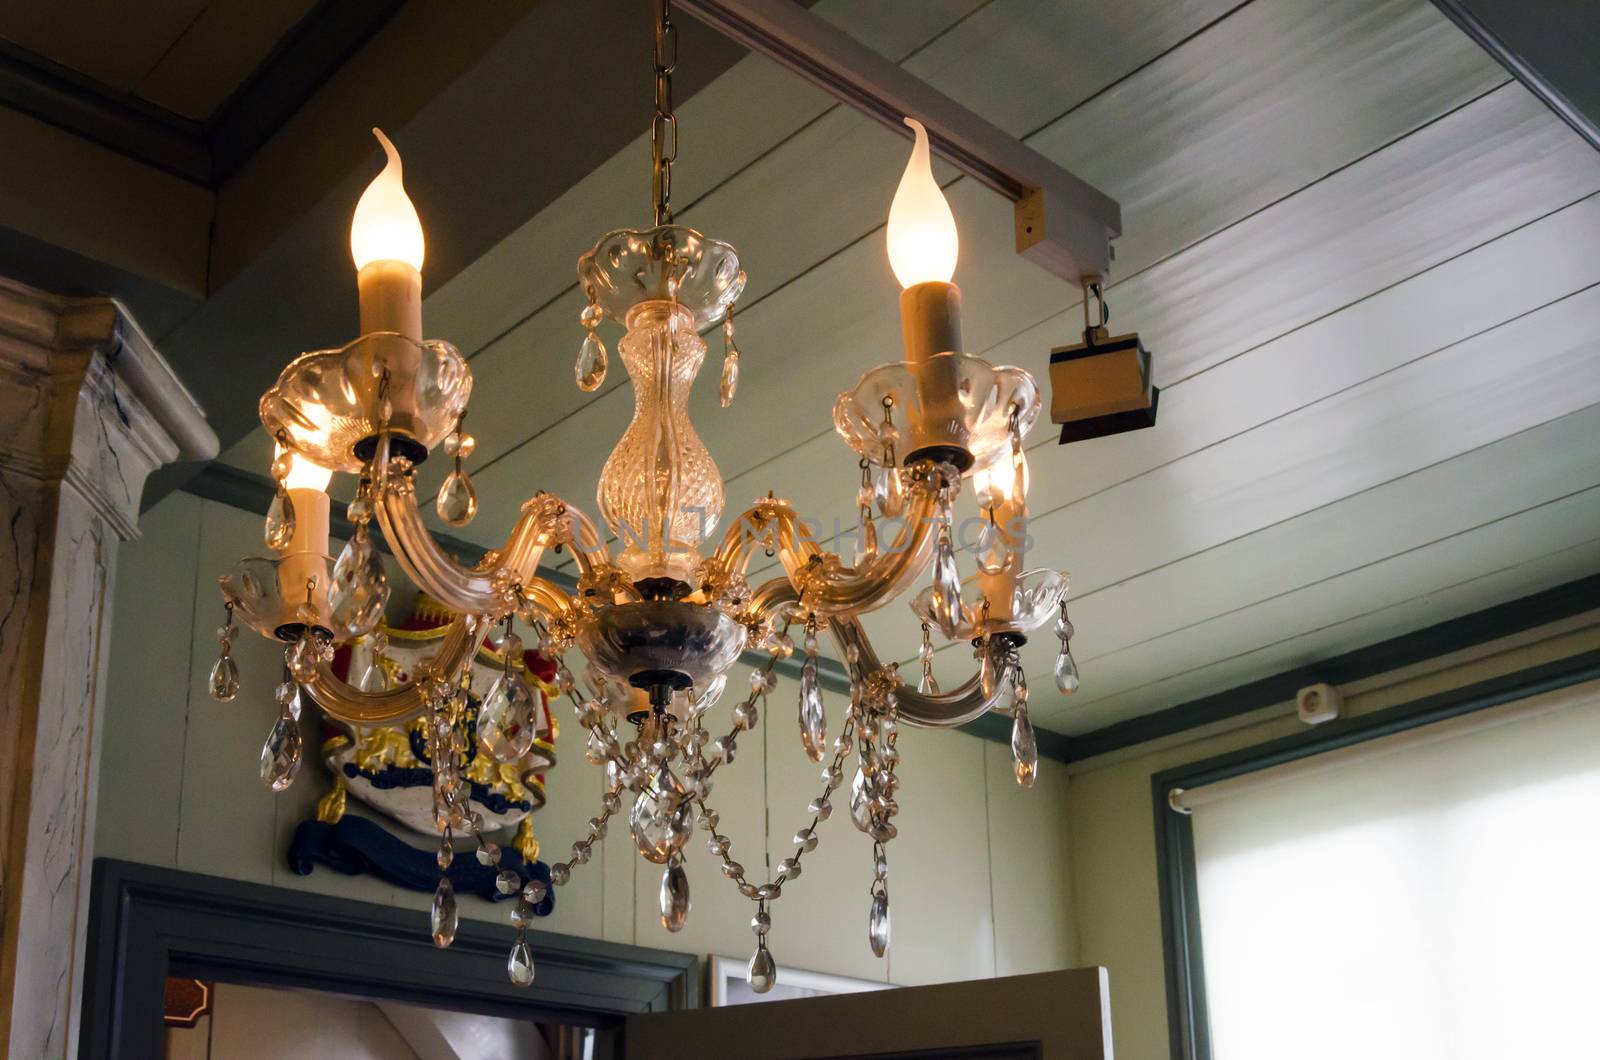 Classic chandelier in room shining